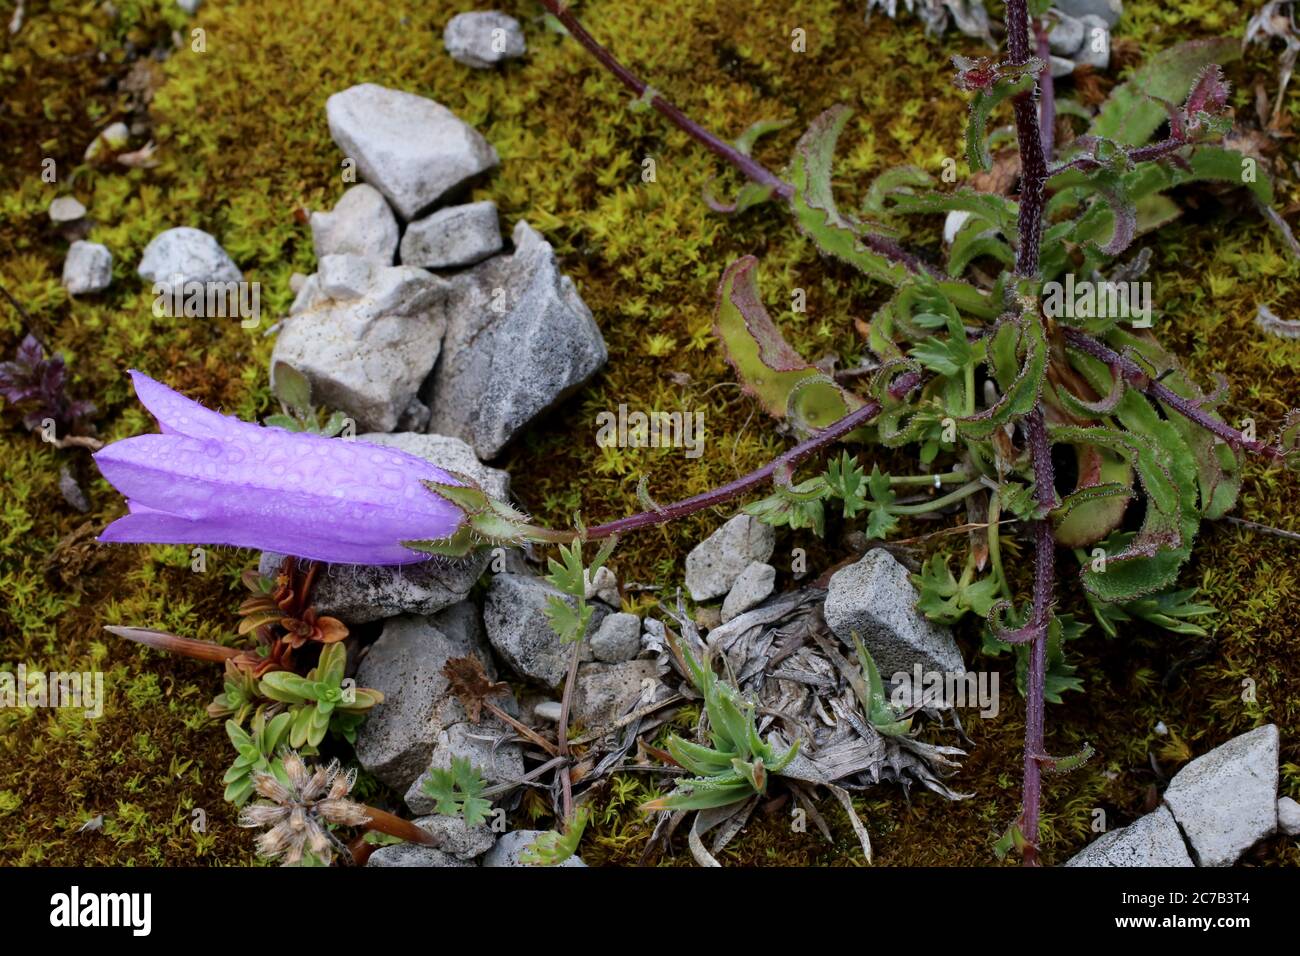 Campanula sibirica subsp. divergentiformis - Wild plant shot in summer. Stock Photo